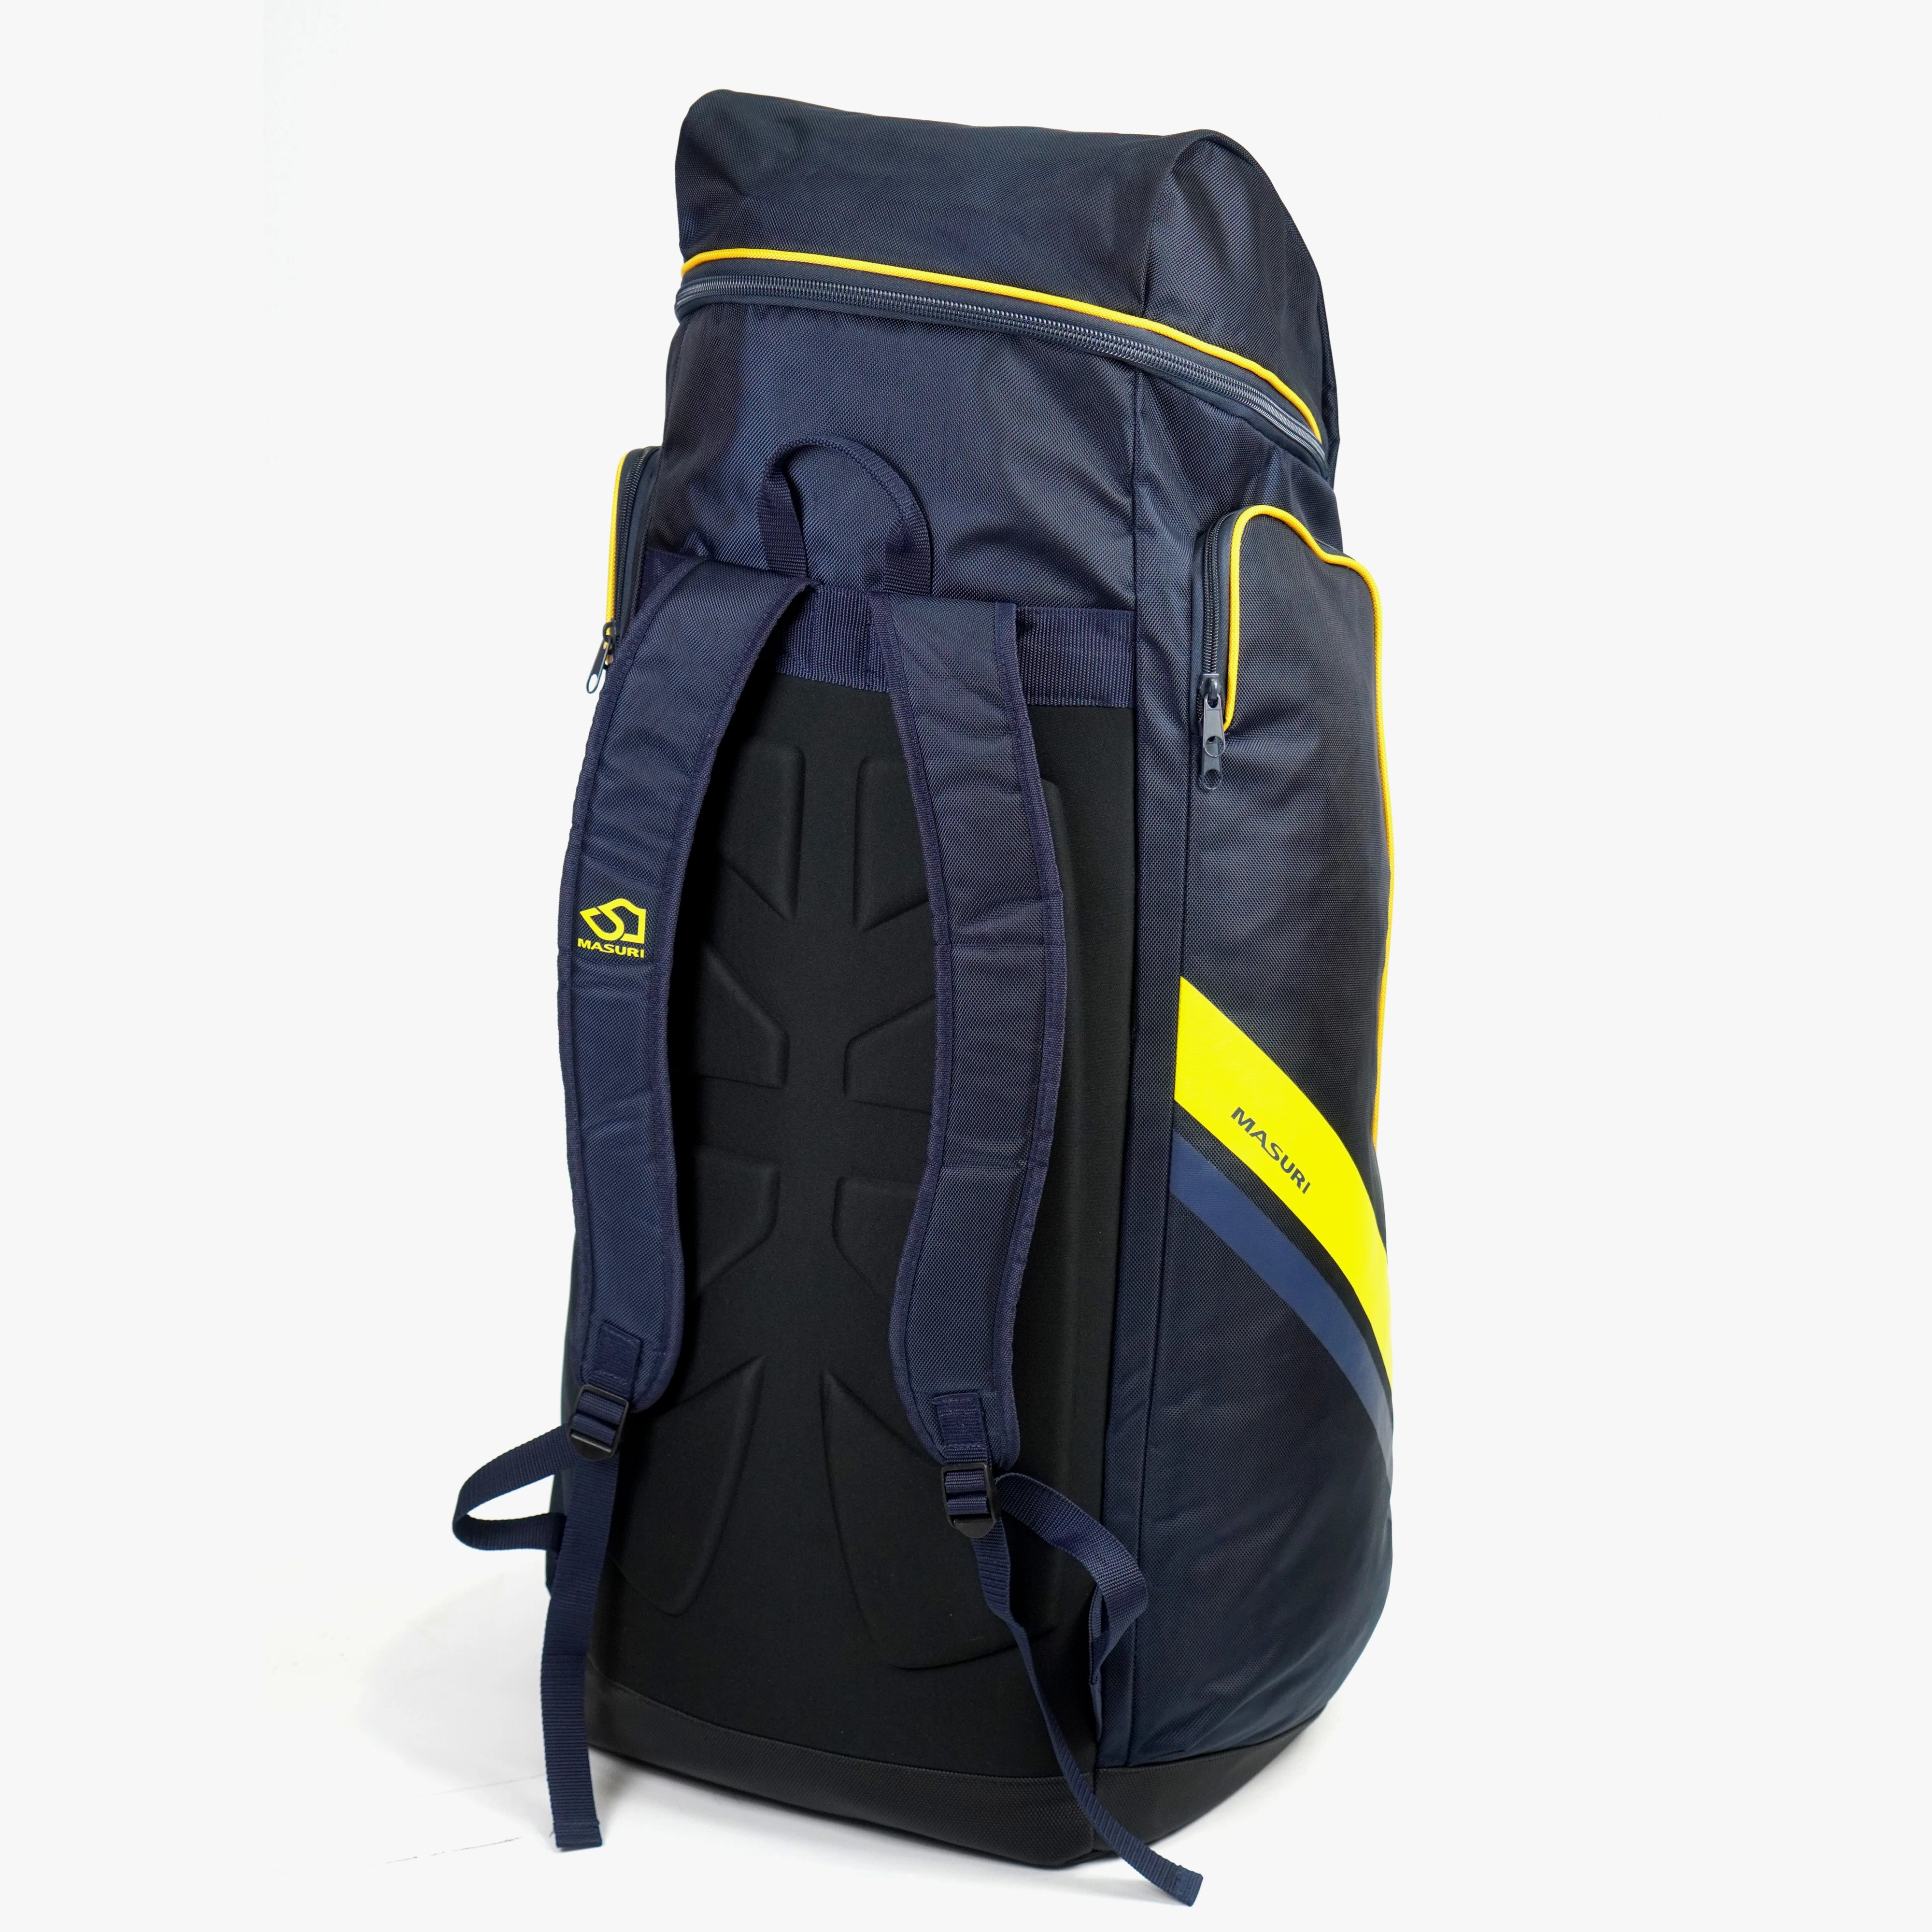 Masuri E line Duffle Cricket Kit Bag